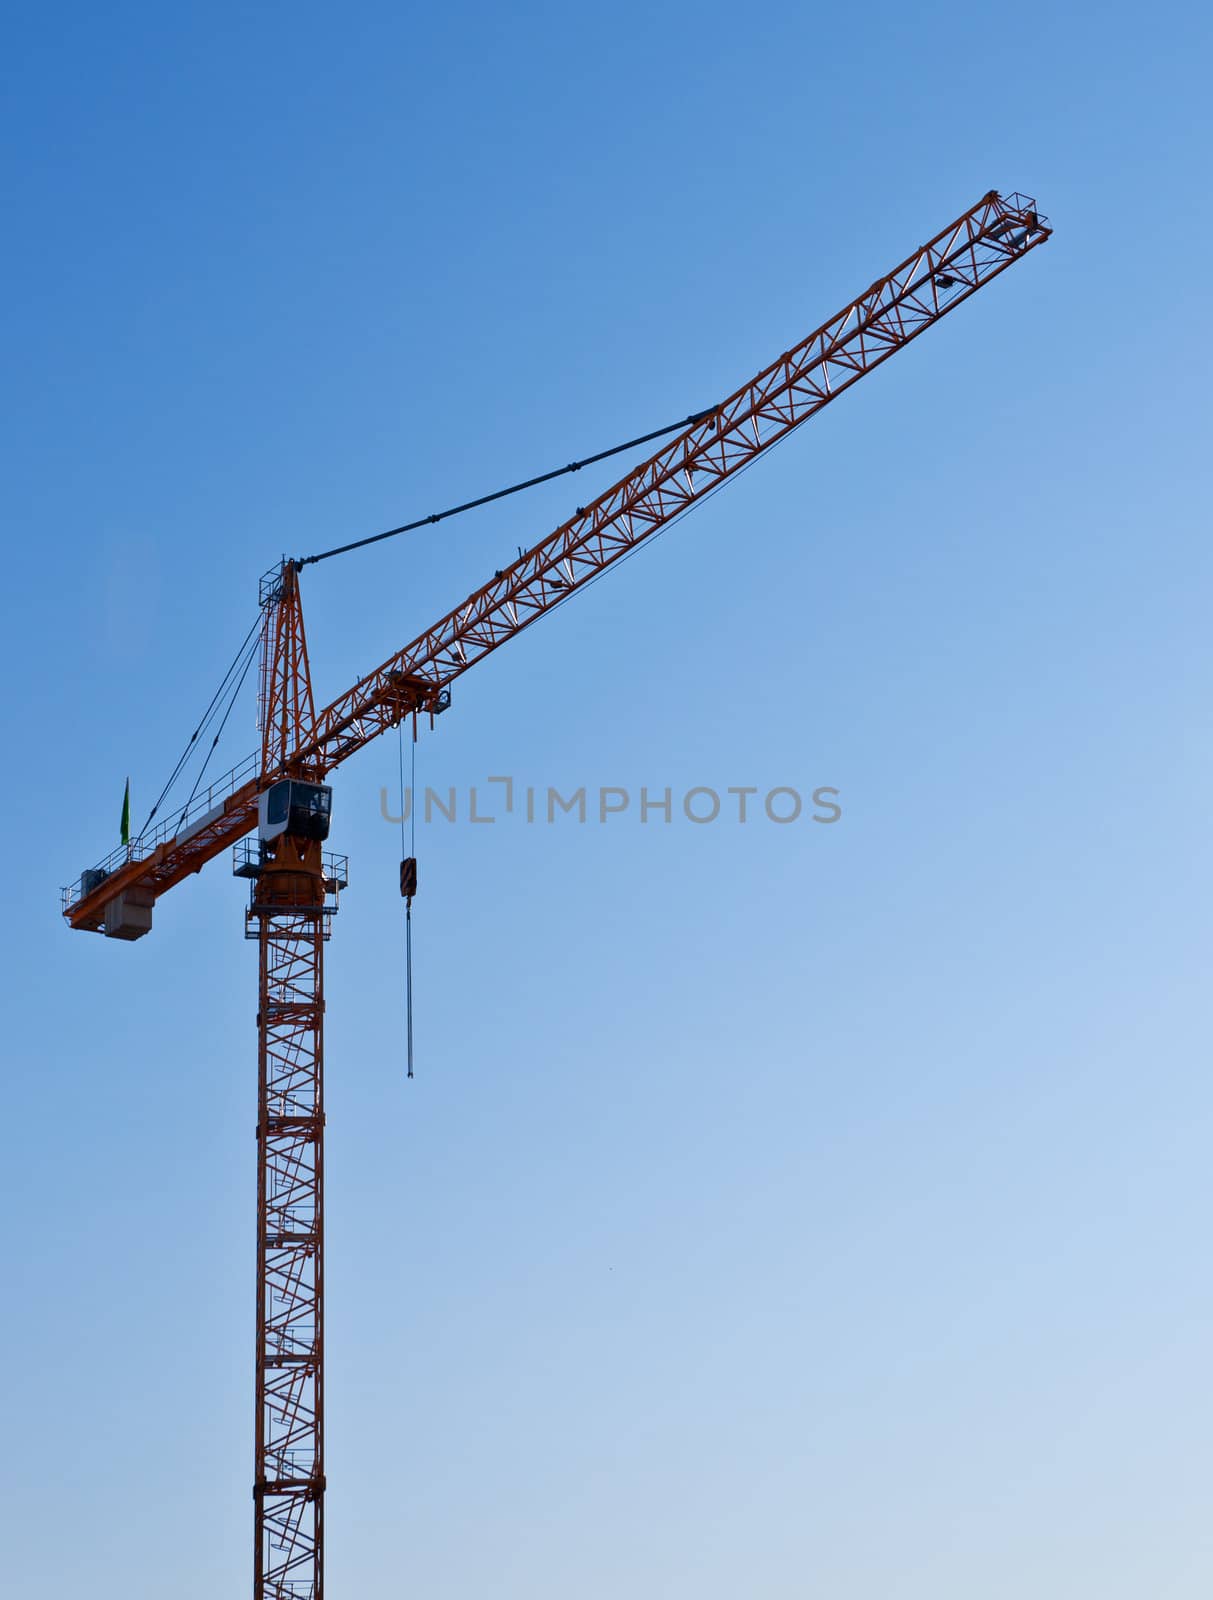 Hoisting crane on blue sky background